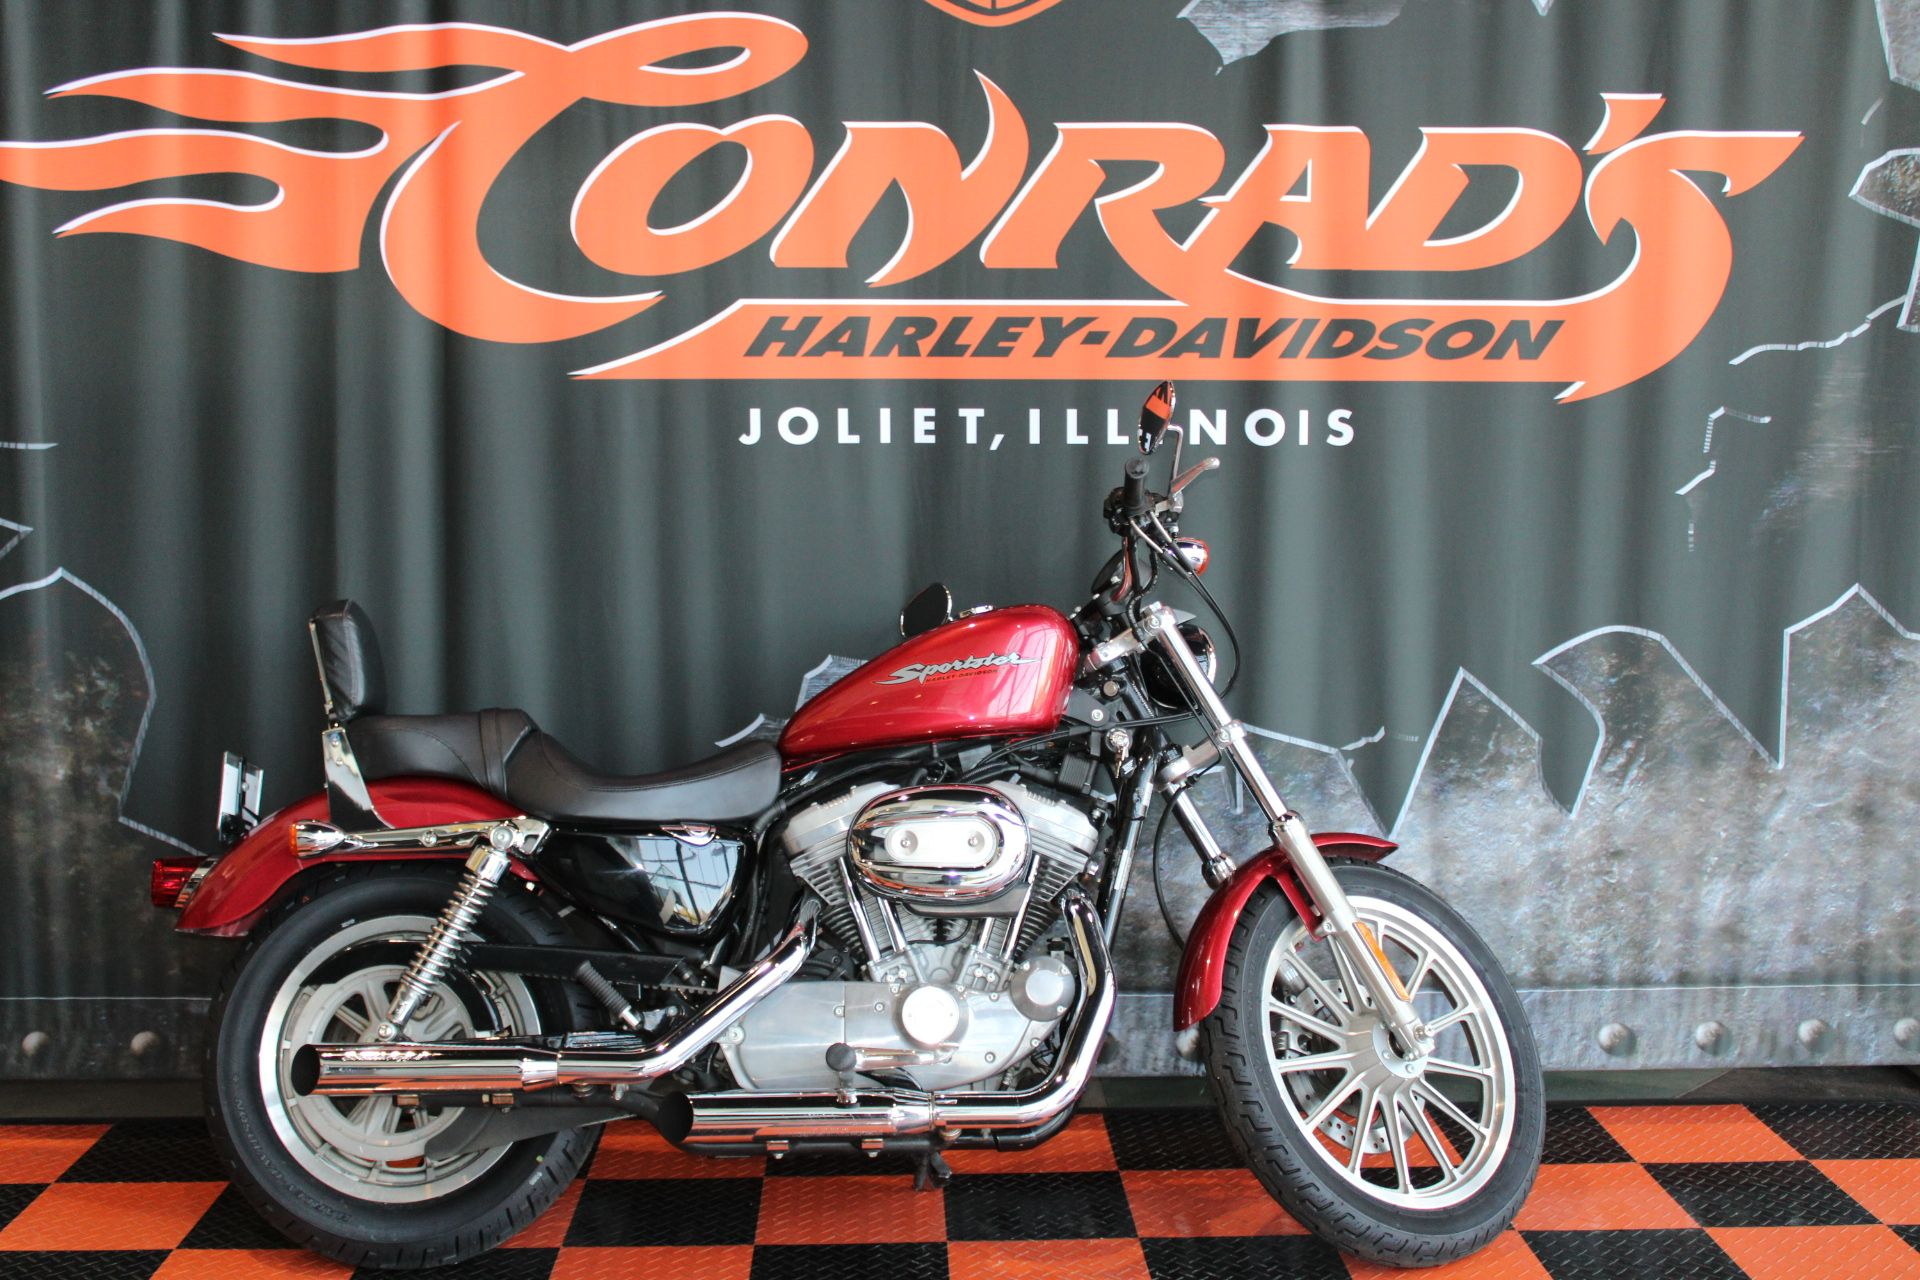 2004 Harley-Davidson Sportster® XL 883 Custom in Shorewood, Illinois - Photo 1